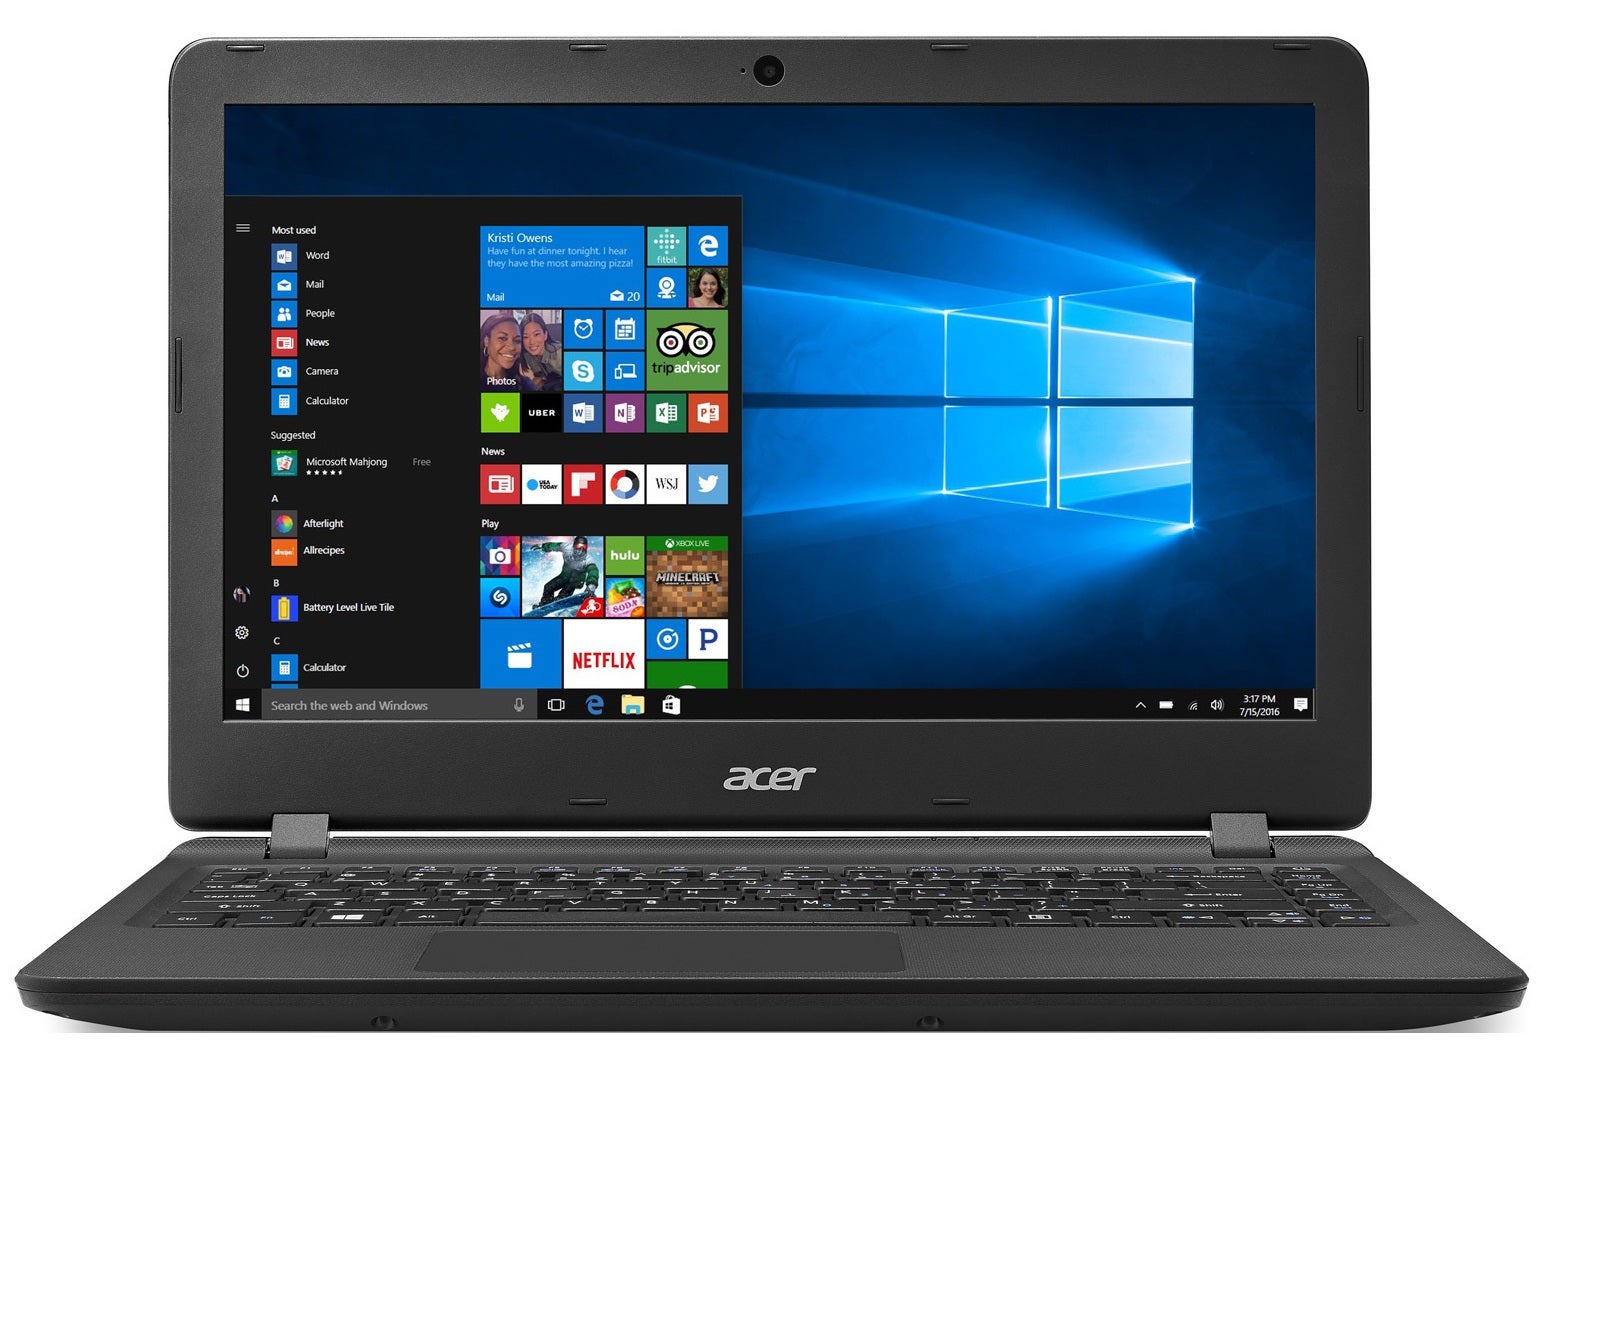 Acer Aspire ES1 332 P5G4 NXGFZSG004 13inch Laptop